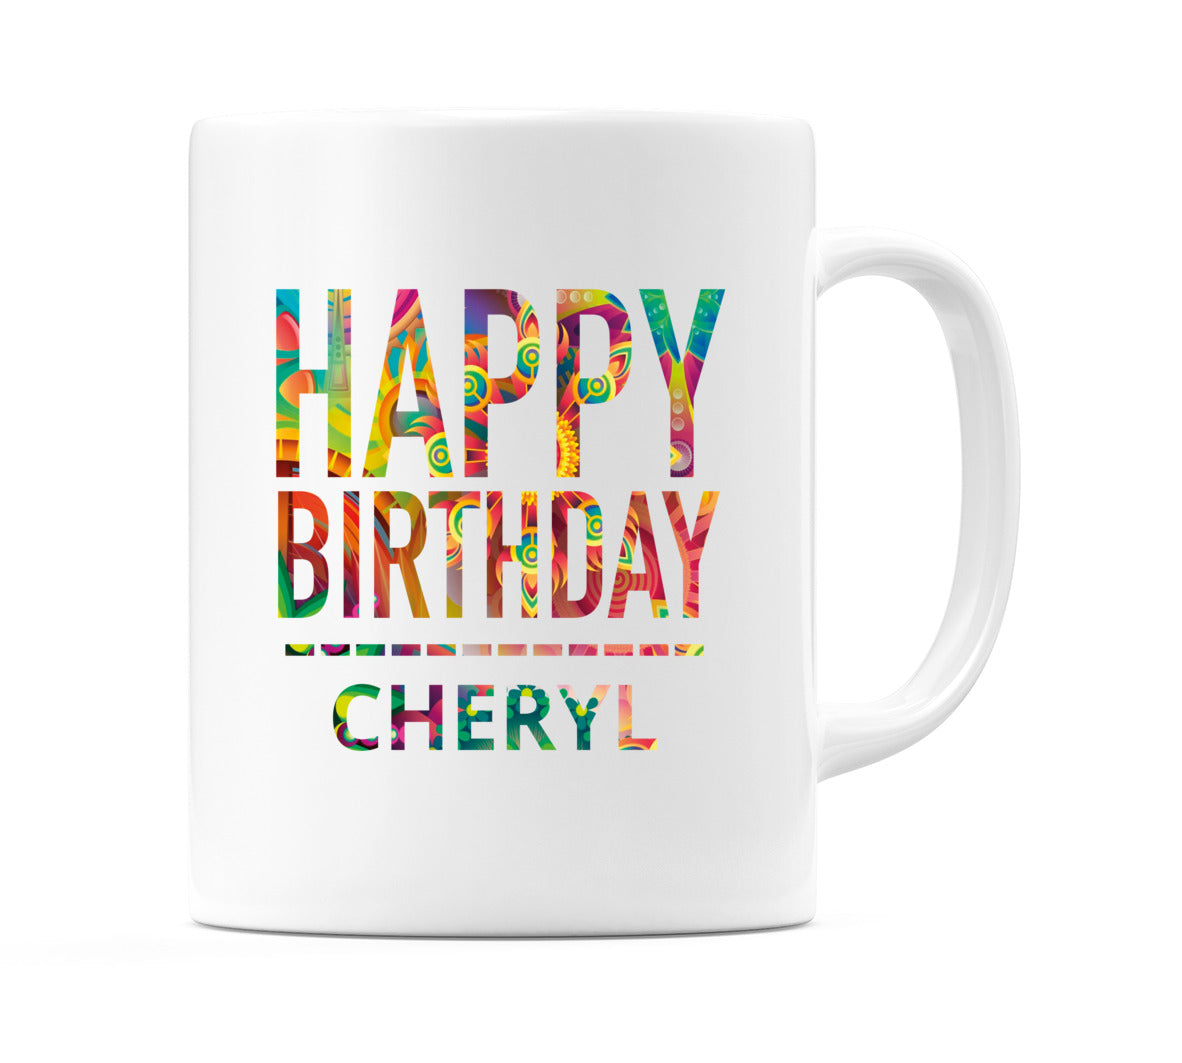 Happy Birthday Cheryl (Tie Dye Effect) Mug Cup by WeDoMugs